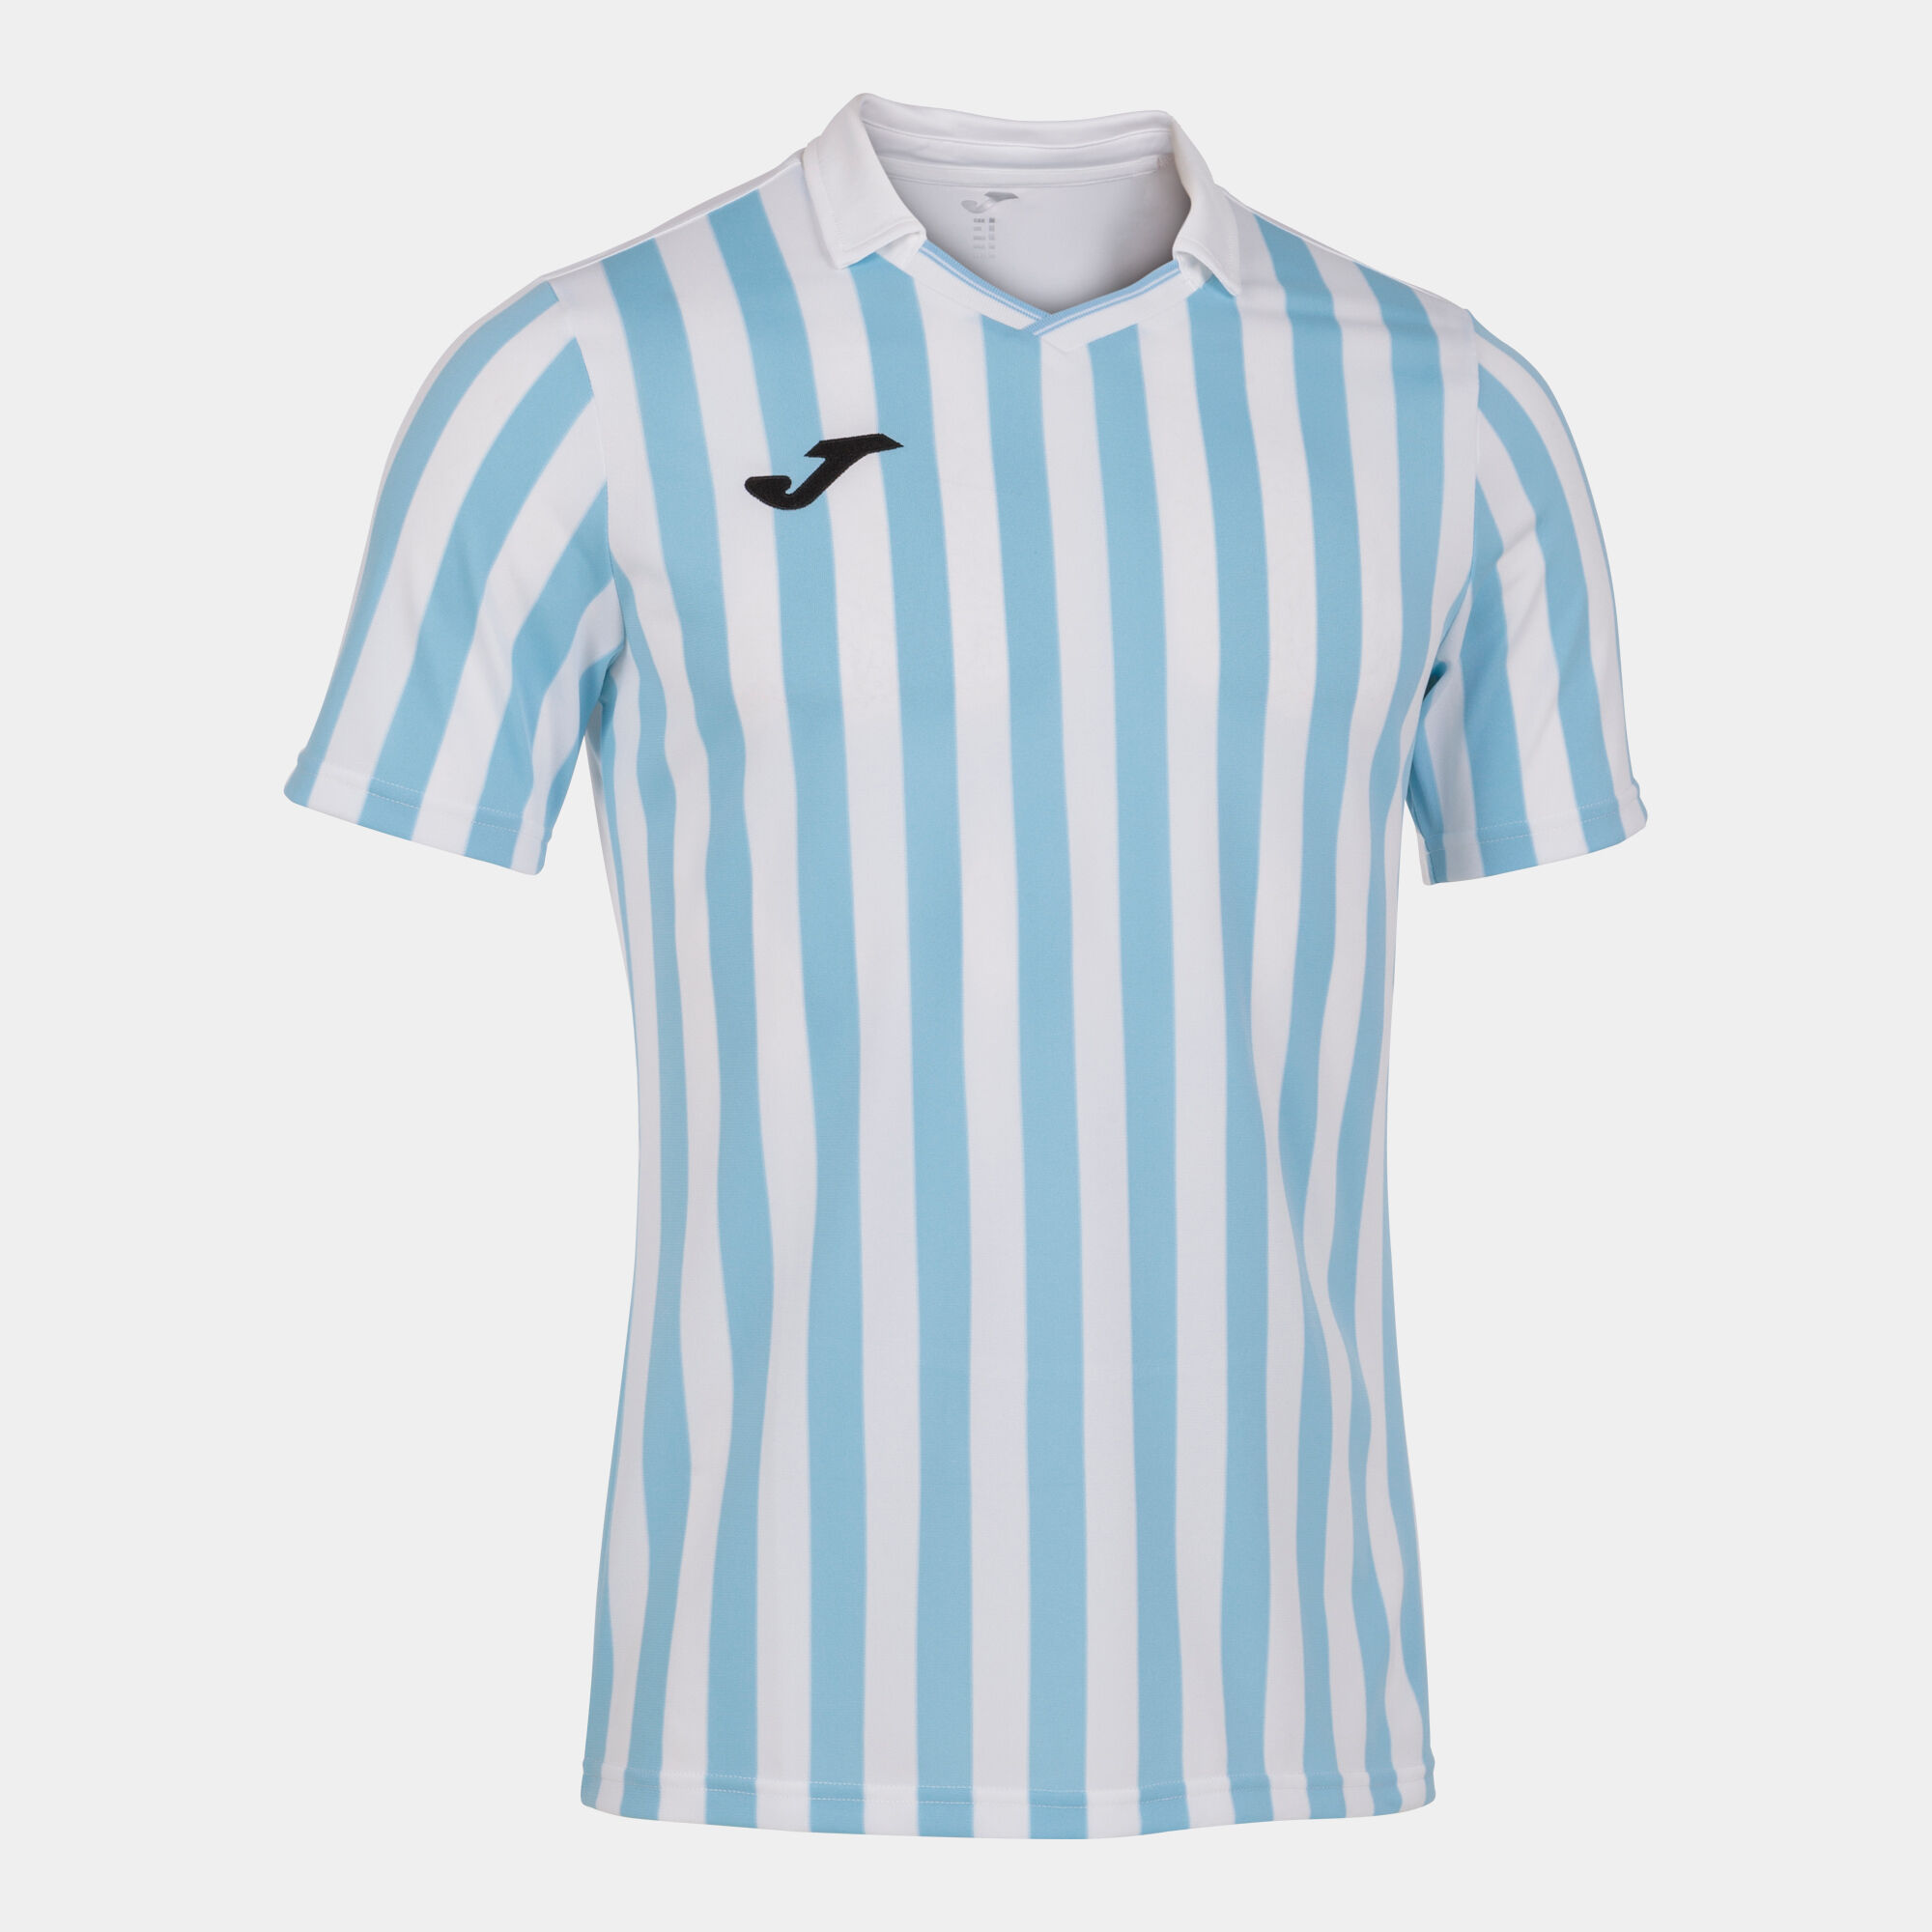 T-shirt manga curta homem Copa II branco azul-celeste